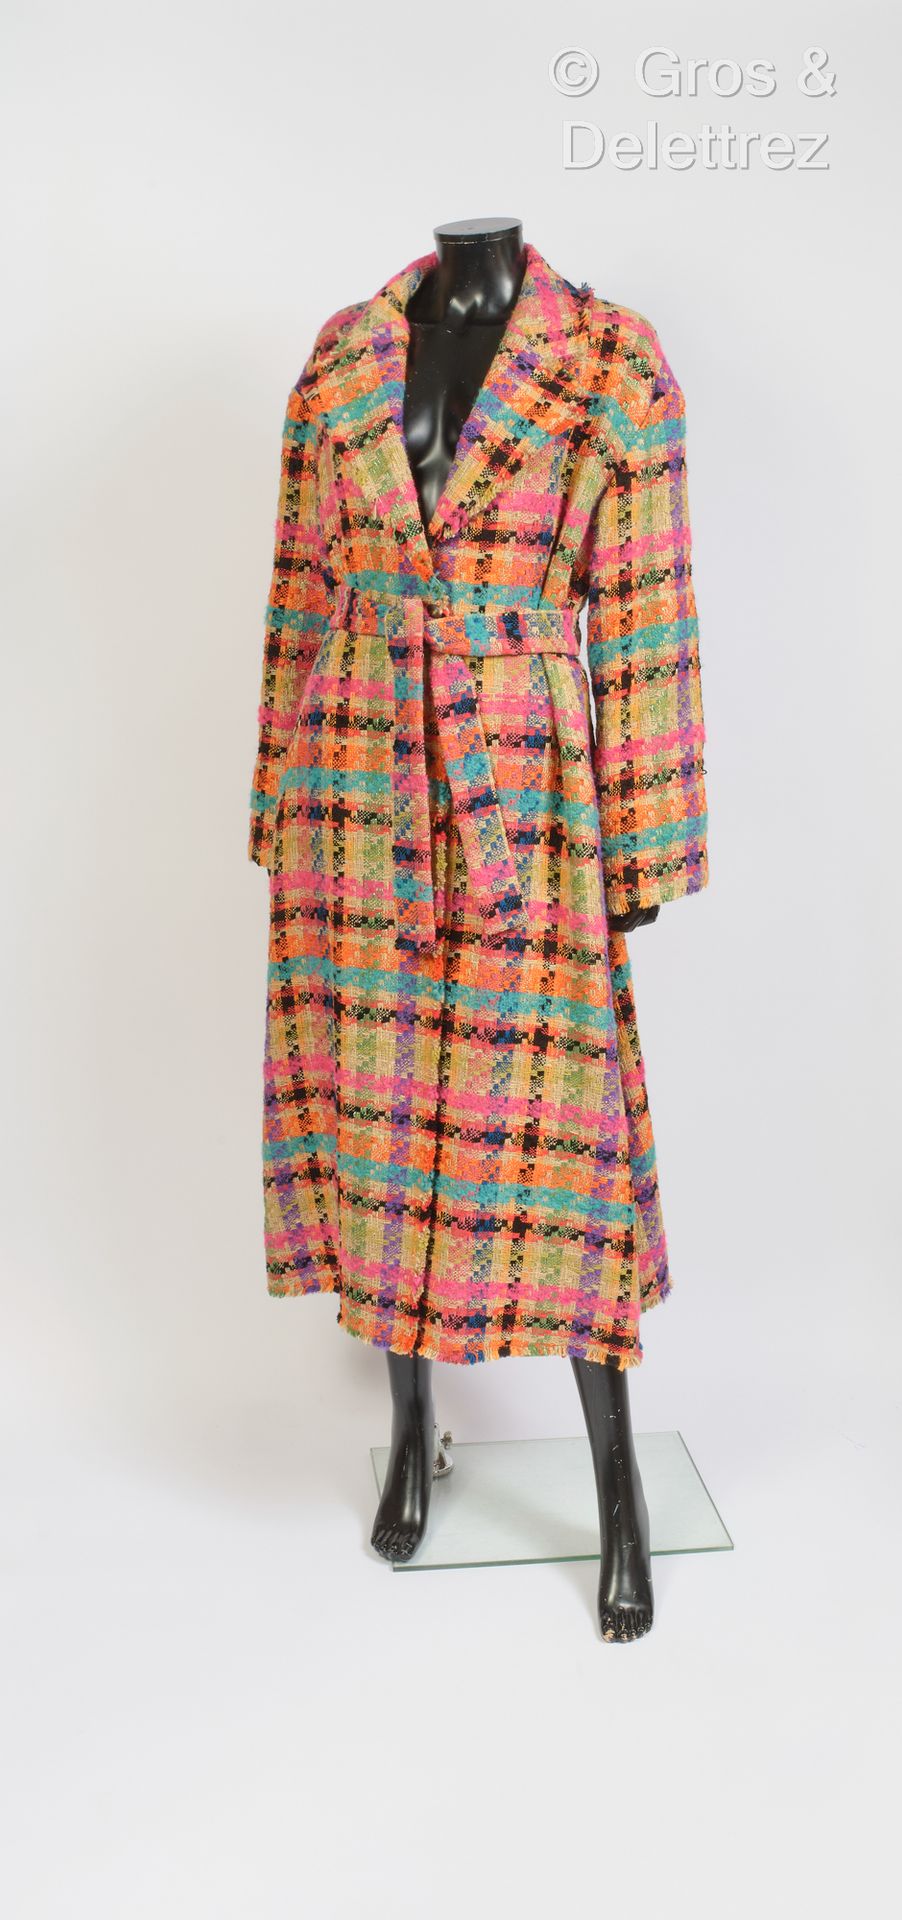 ETRO Collection Pre-Fall 2020
Manteau oversize en tweed multicolore à finitions &hellip;